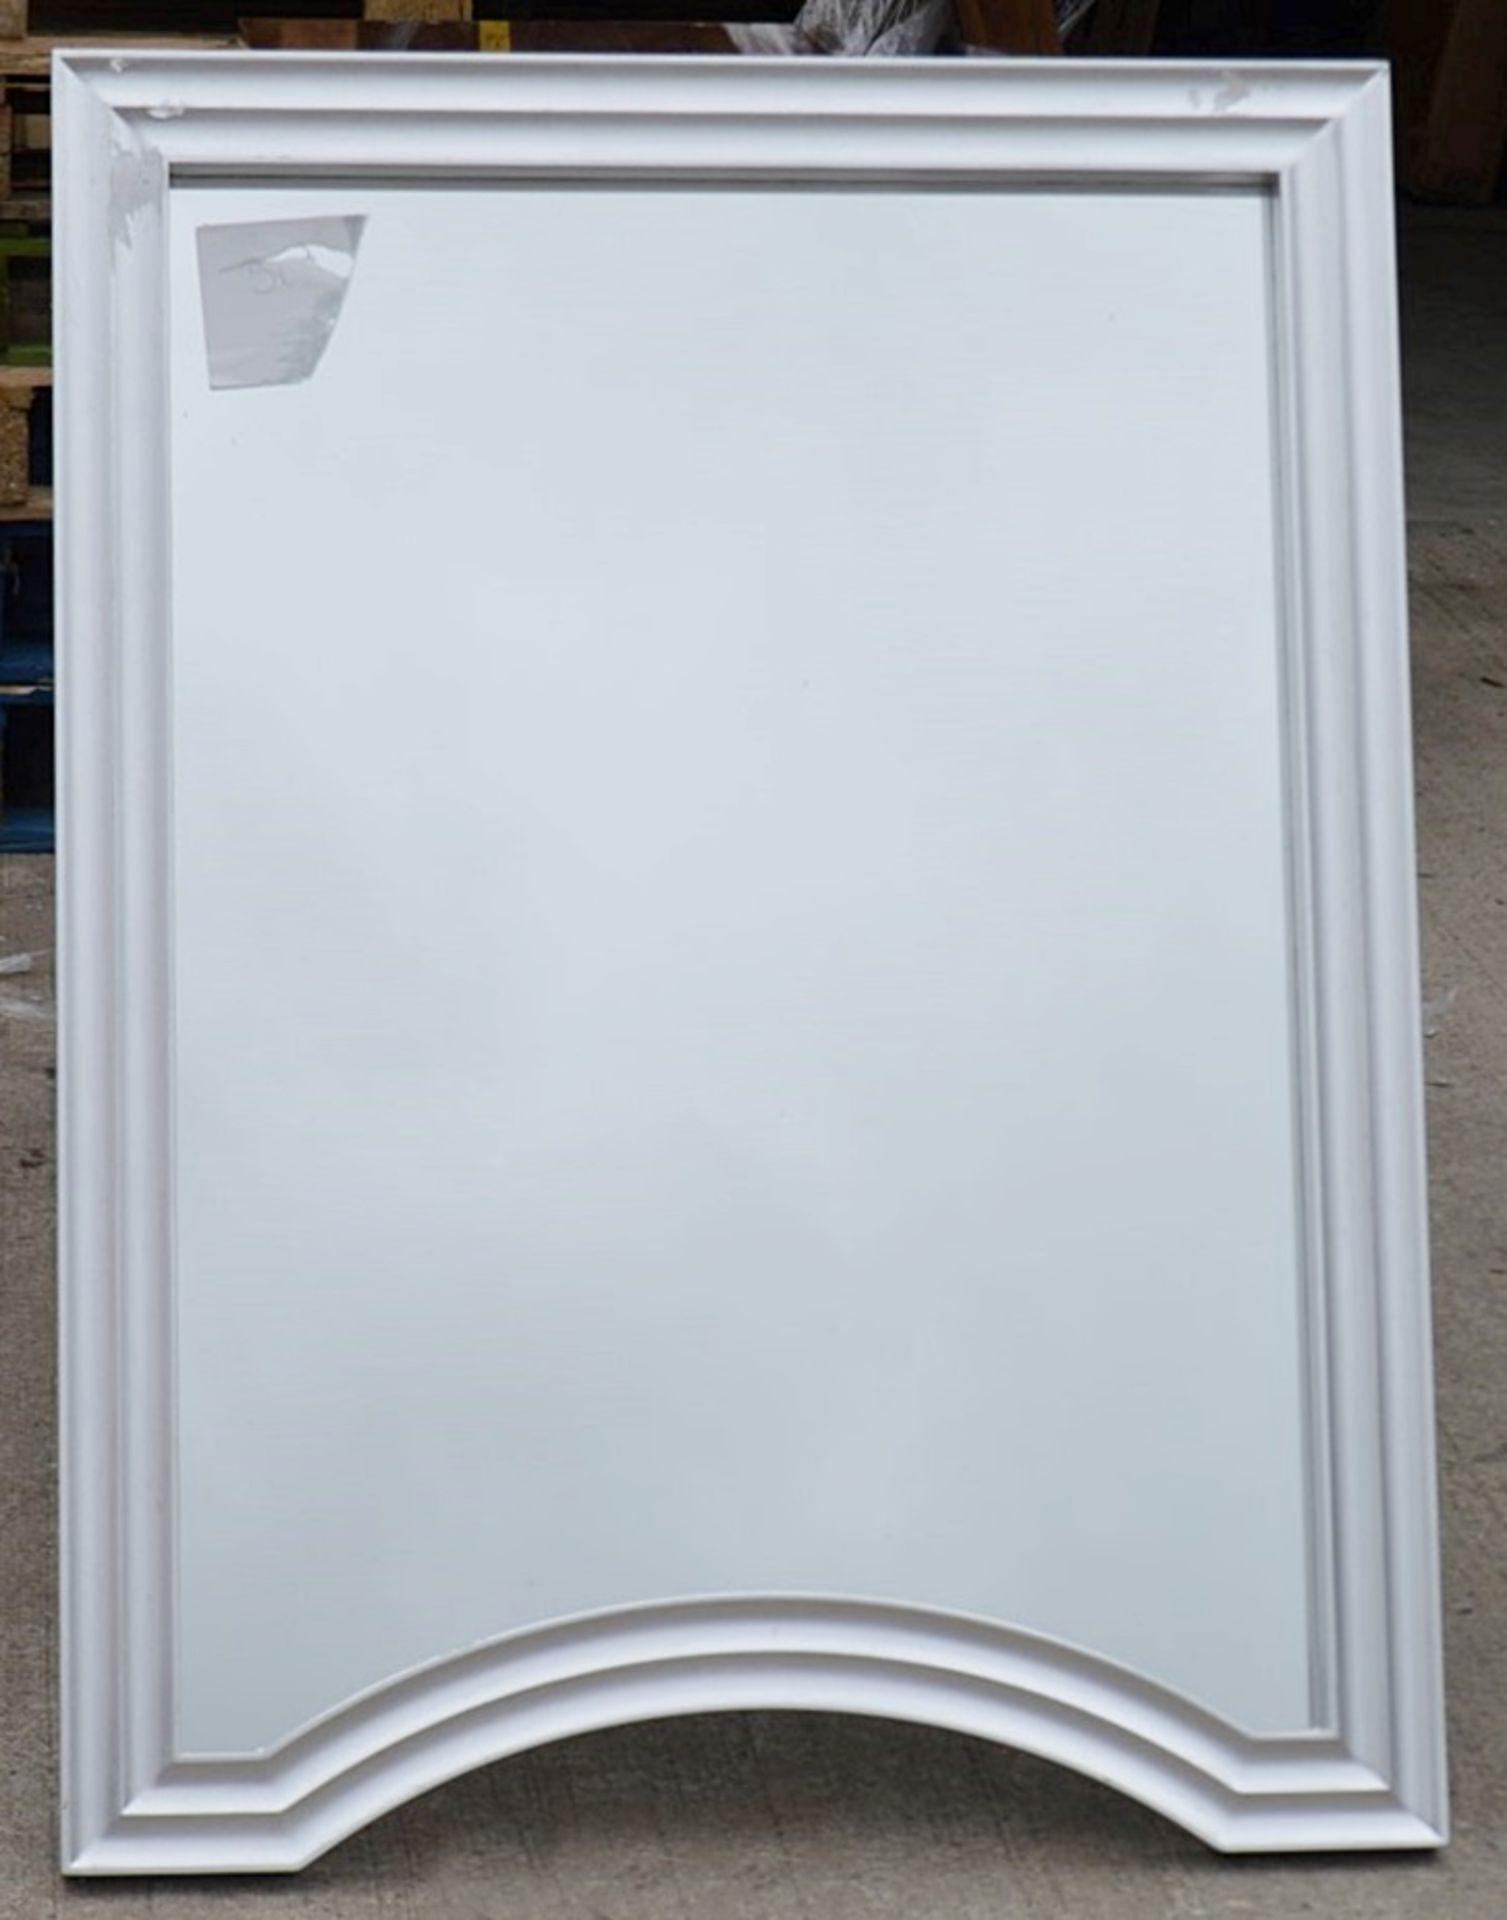 1 x JUSTIN VAN BREDA Elegant Rectangular Mirror In A Silver Leaf Frame - Original Price £1,069